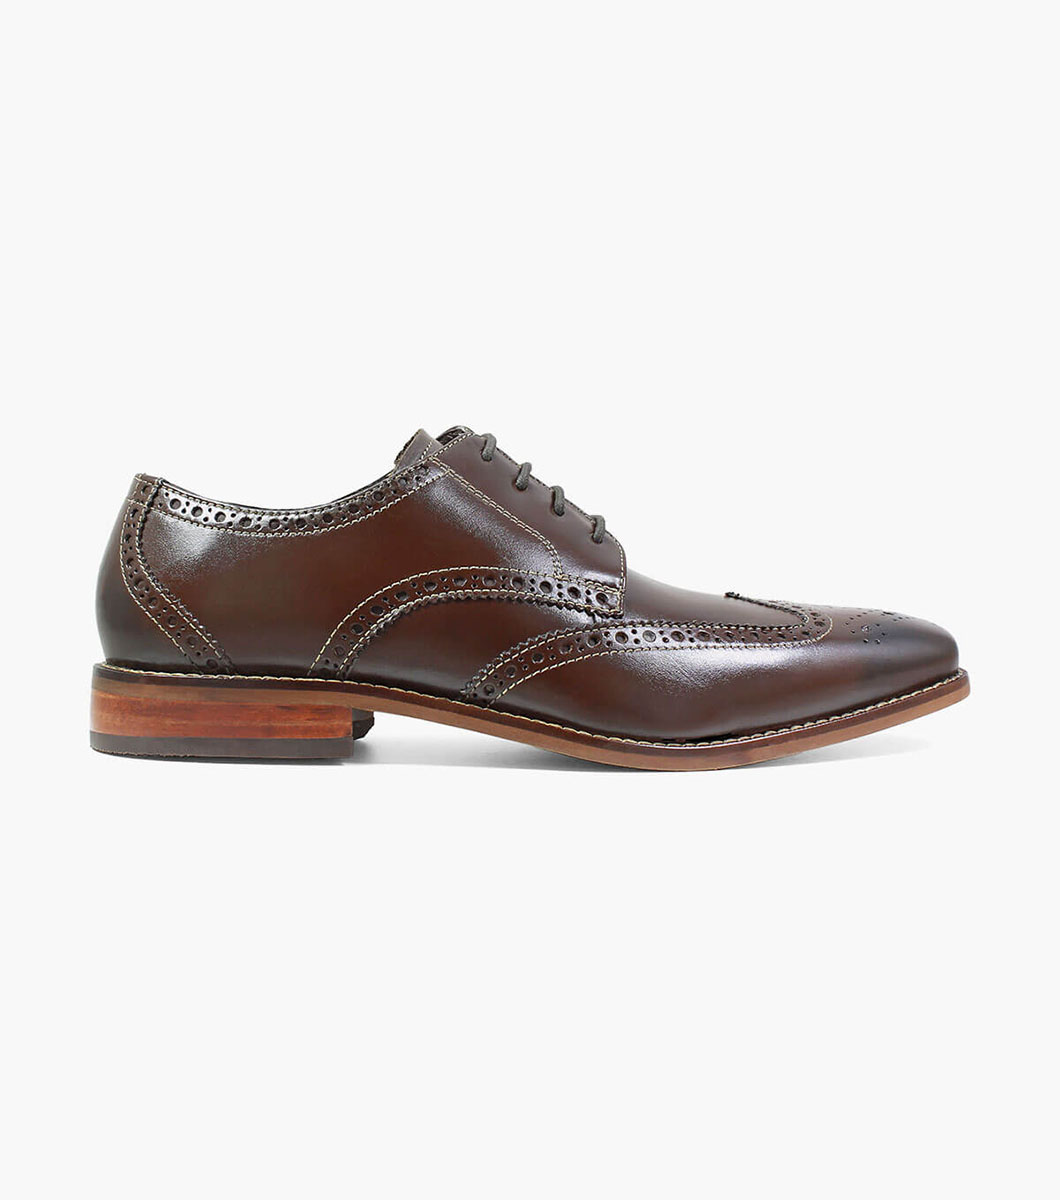 Castellano Wingtip Oxford Men’s Dress Shoes | Florsheim.com